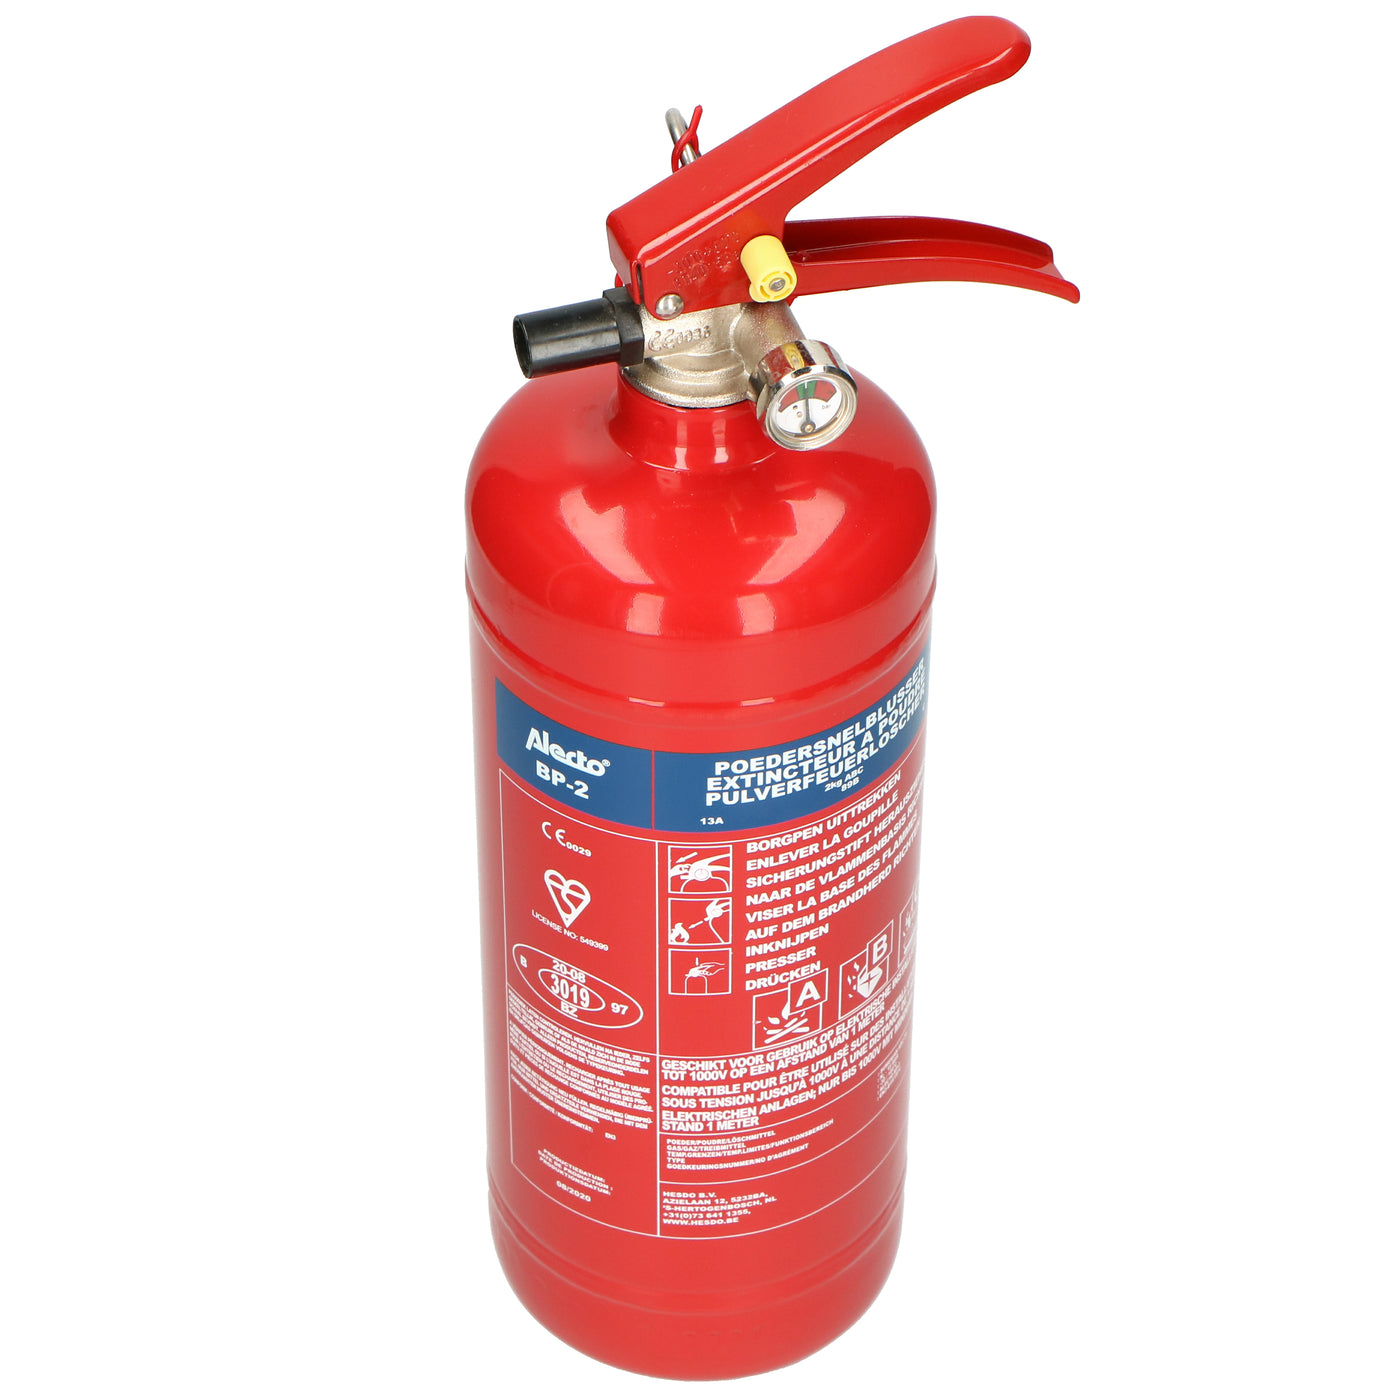 Alecto BP-2 - Fire extinguisher powder 2 kilogram